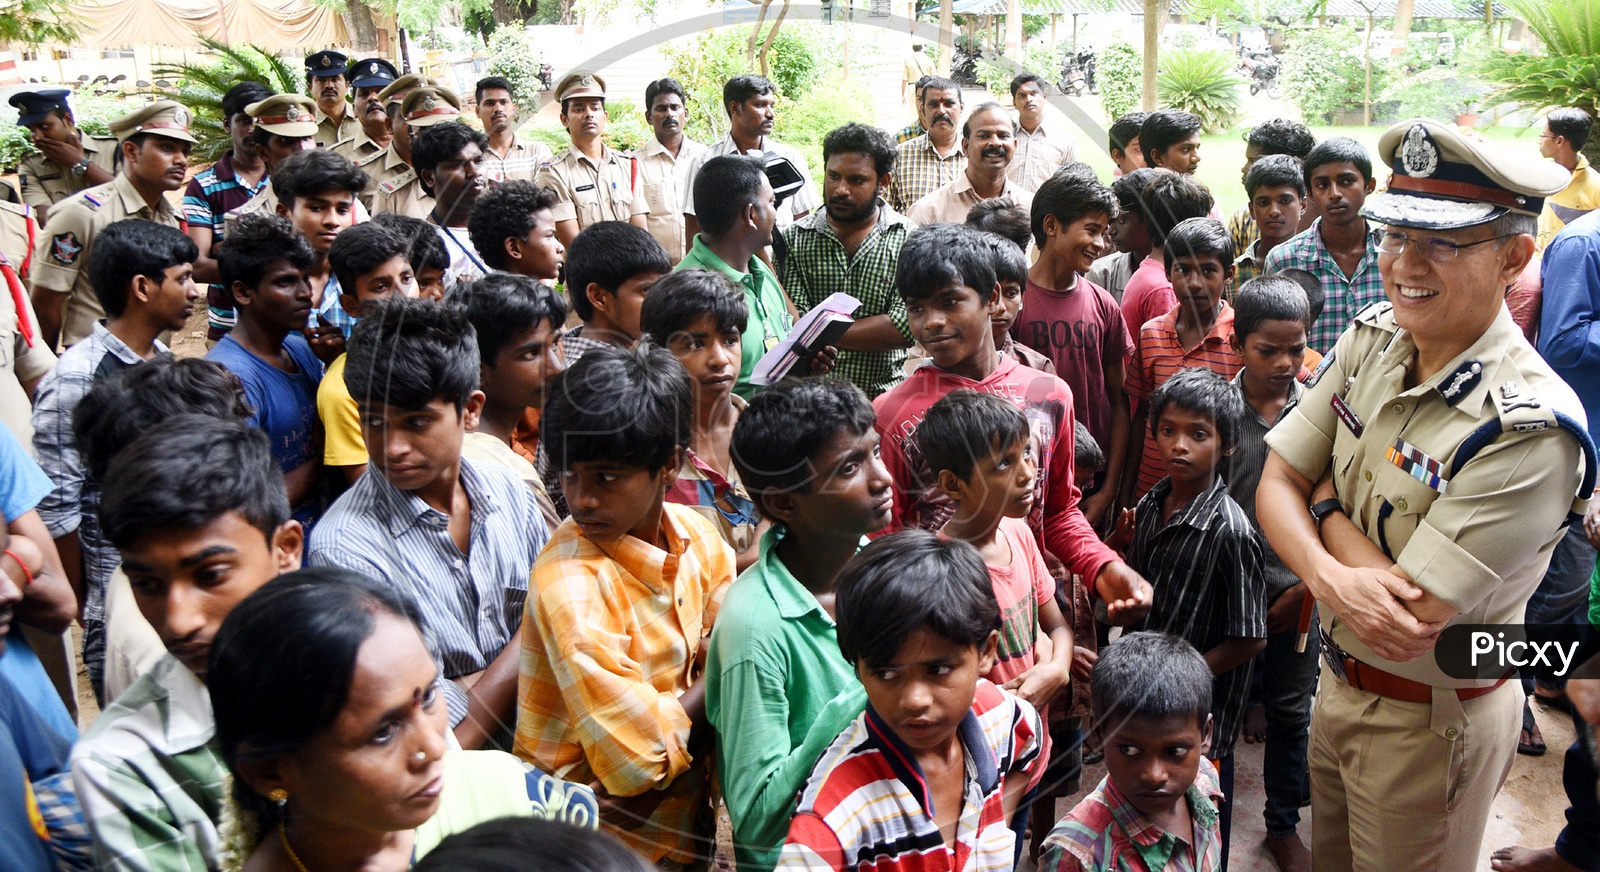 Sri D. Gautam Sawang, IPS, Commissioner of Police, Vijayawada City speaking in Operation Muskan to rescue missing children